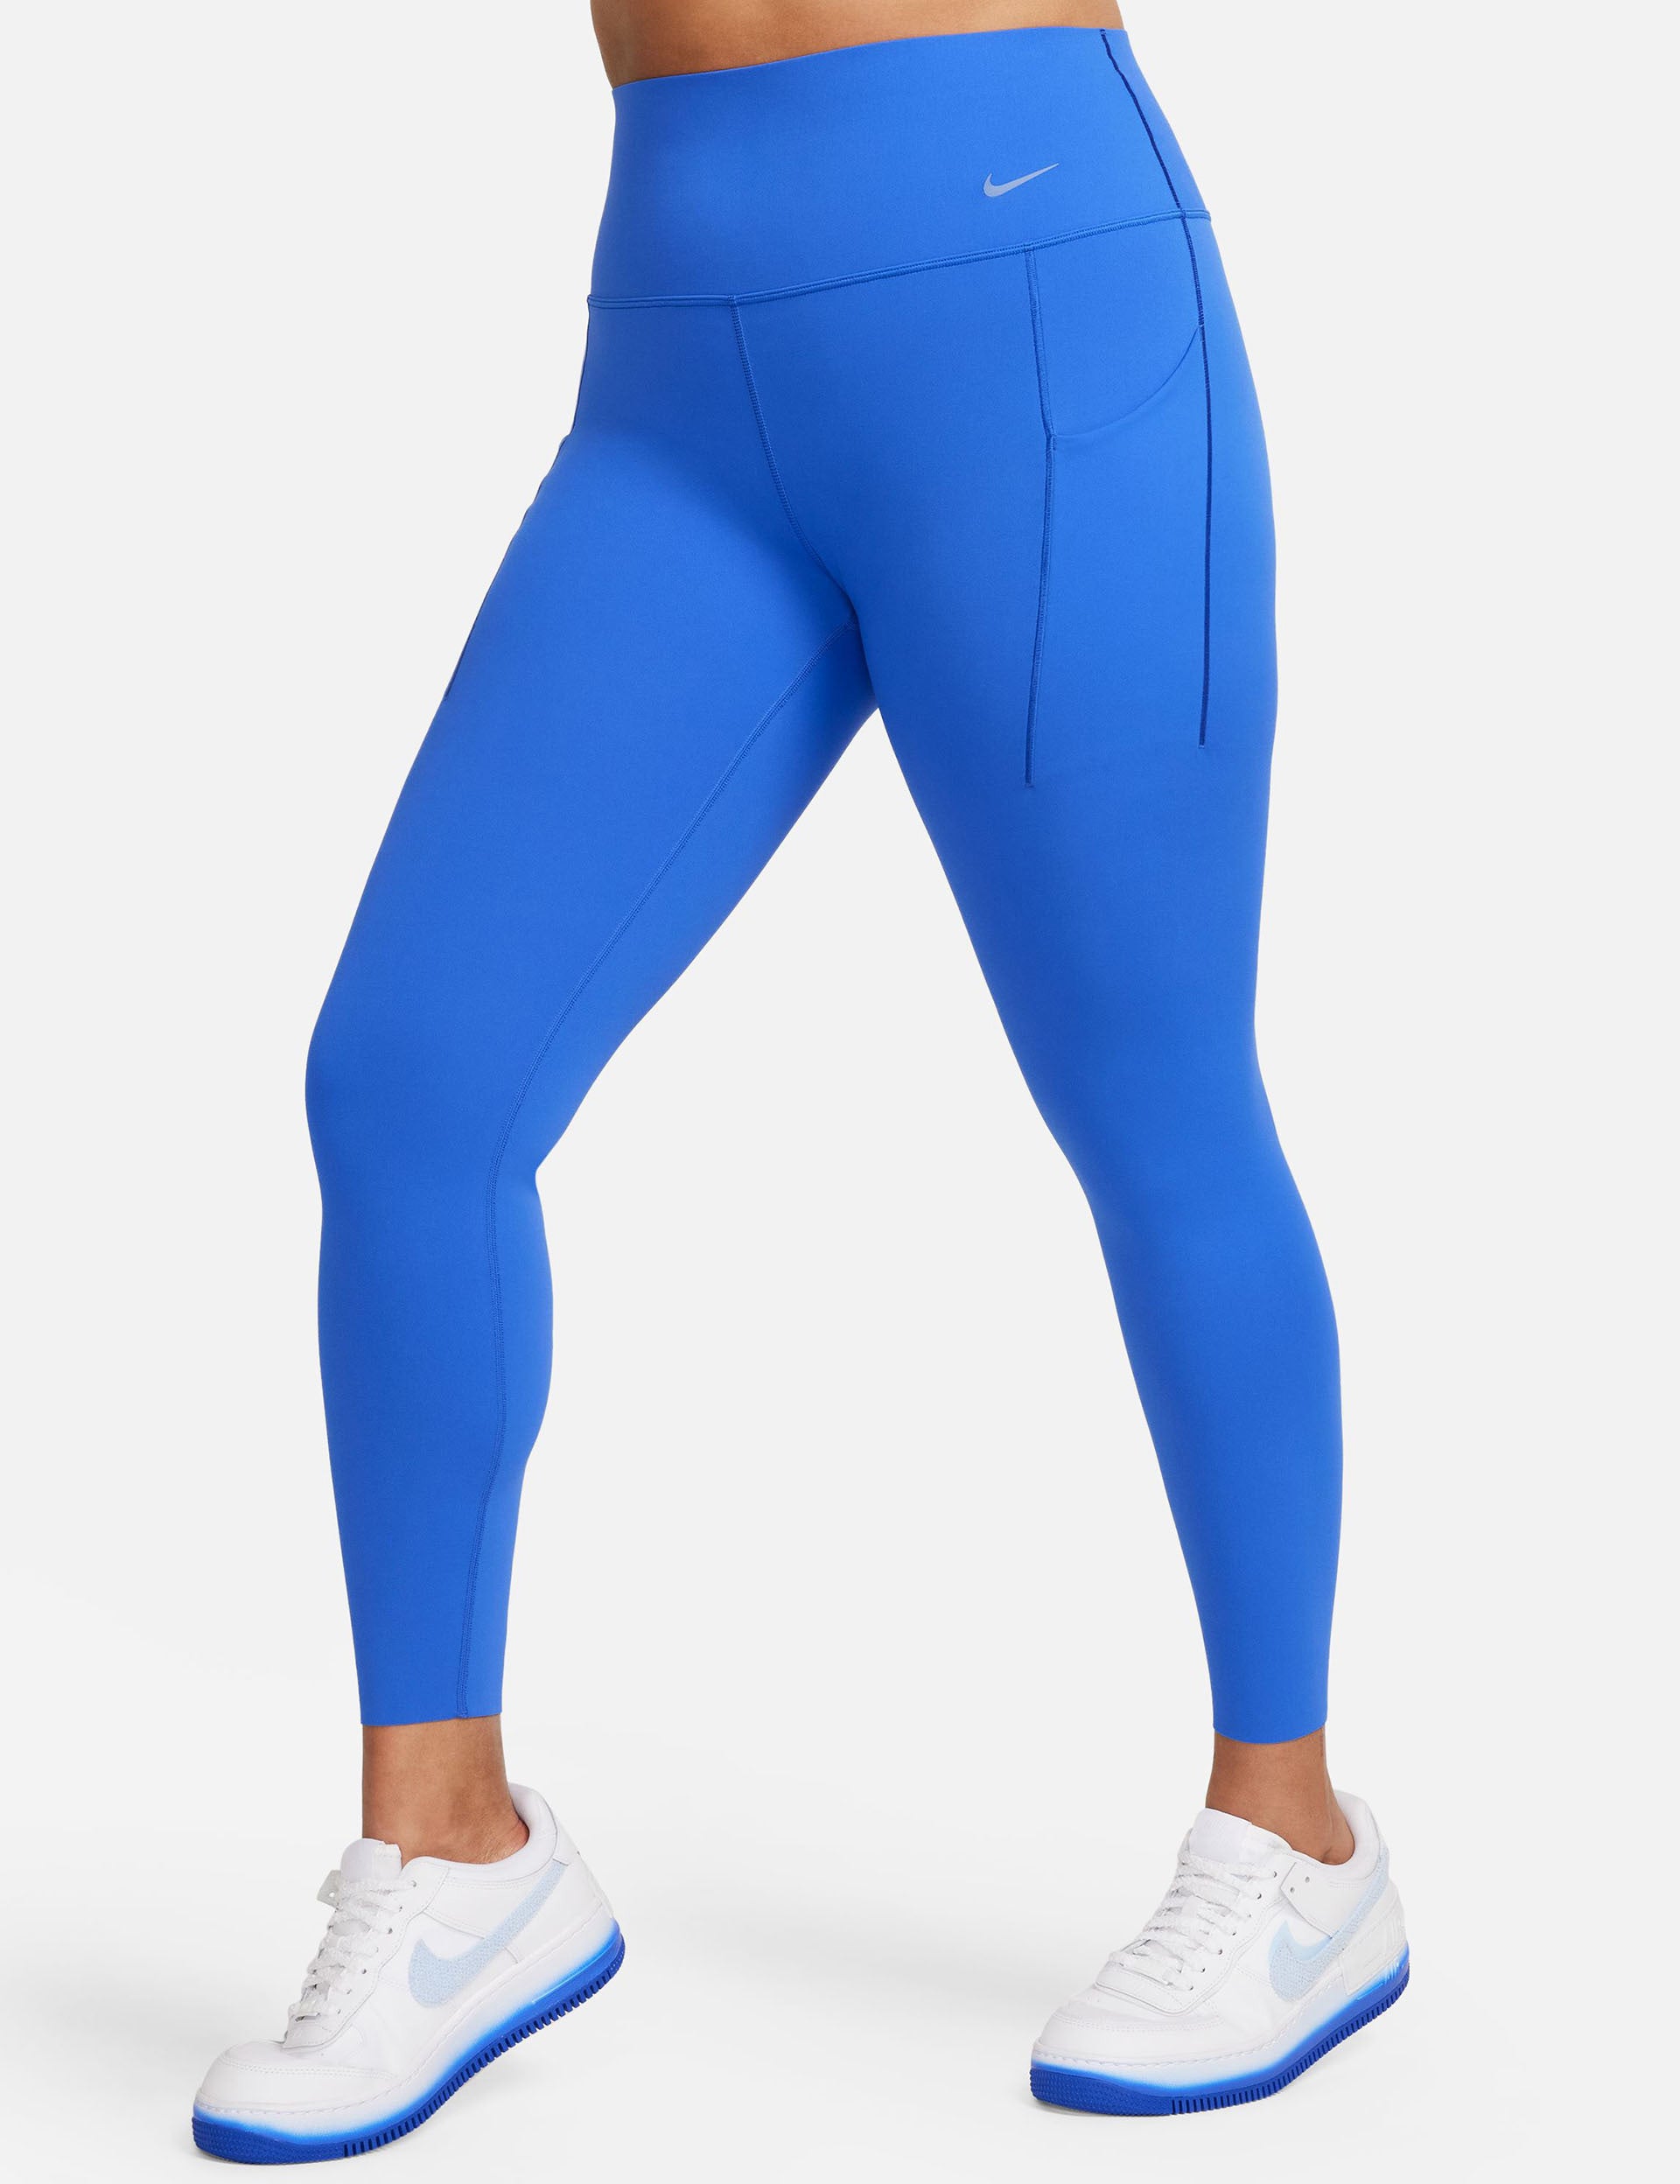 Universa high-rise leggings in blue - Nike